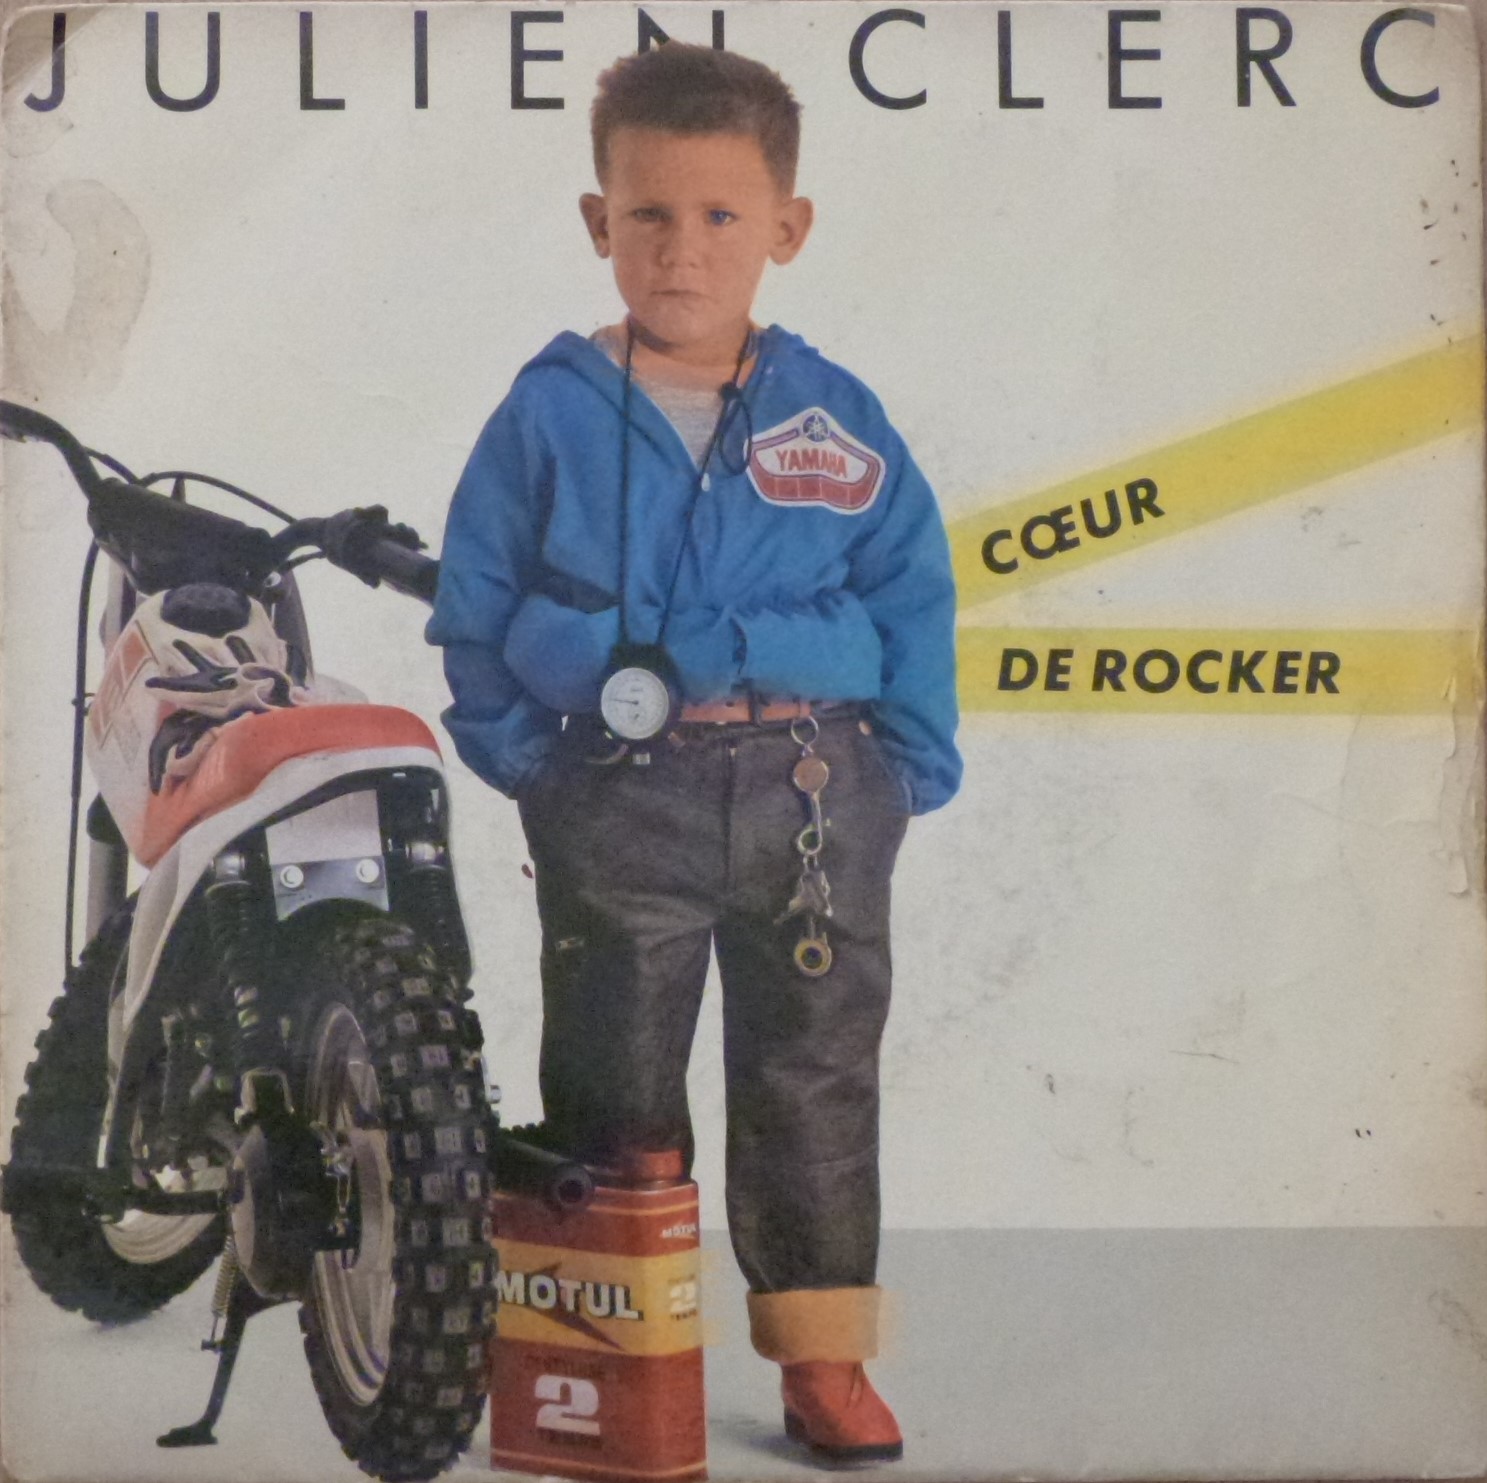 Julien Clerc, Cœur de rocker